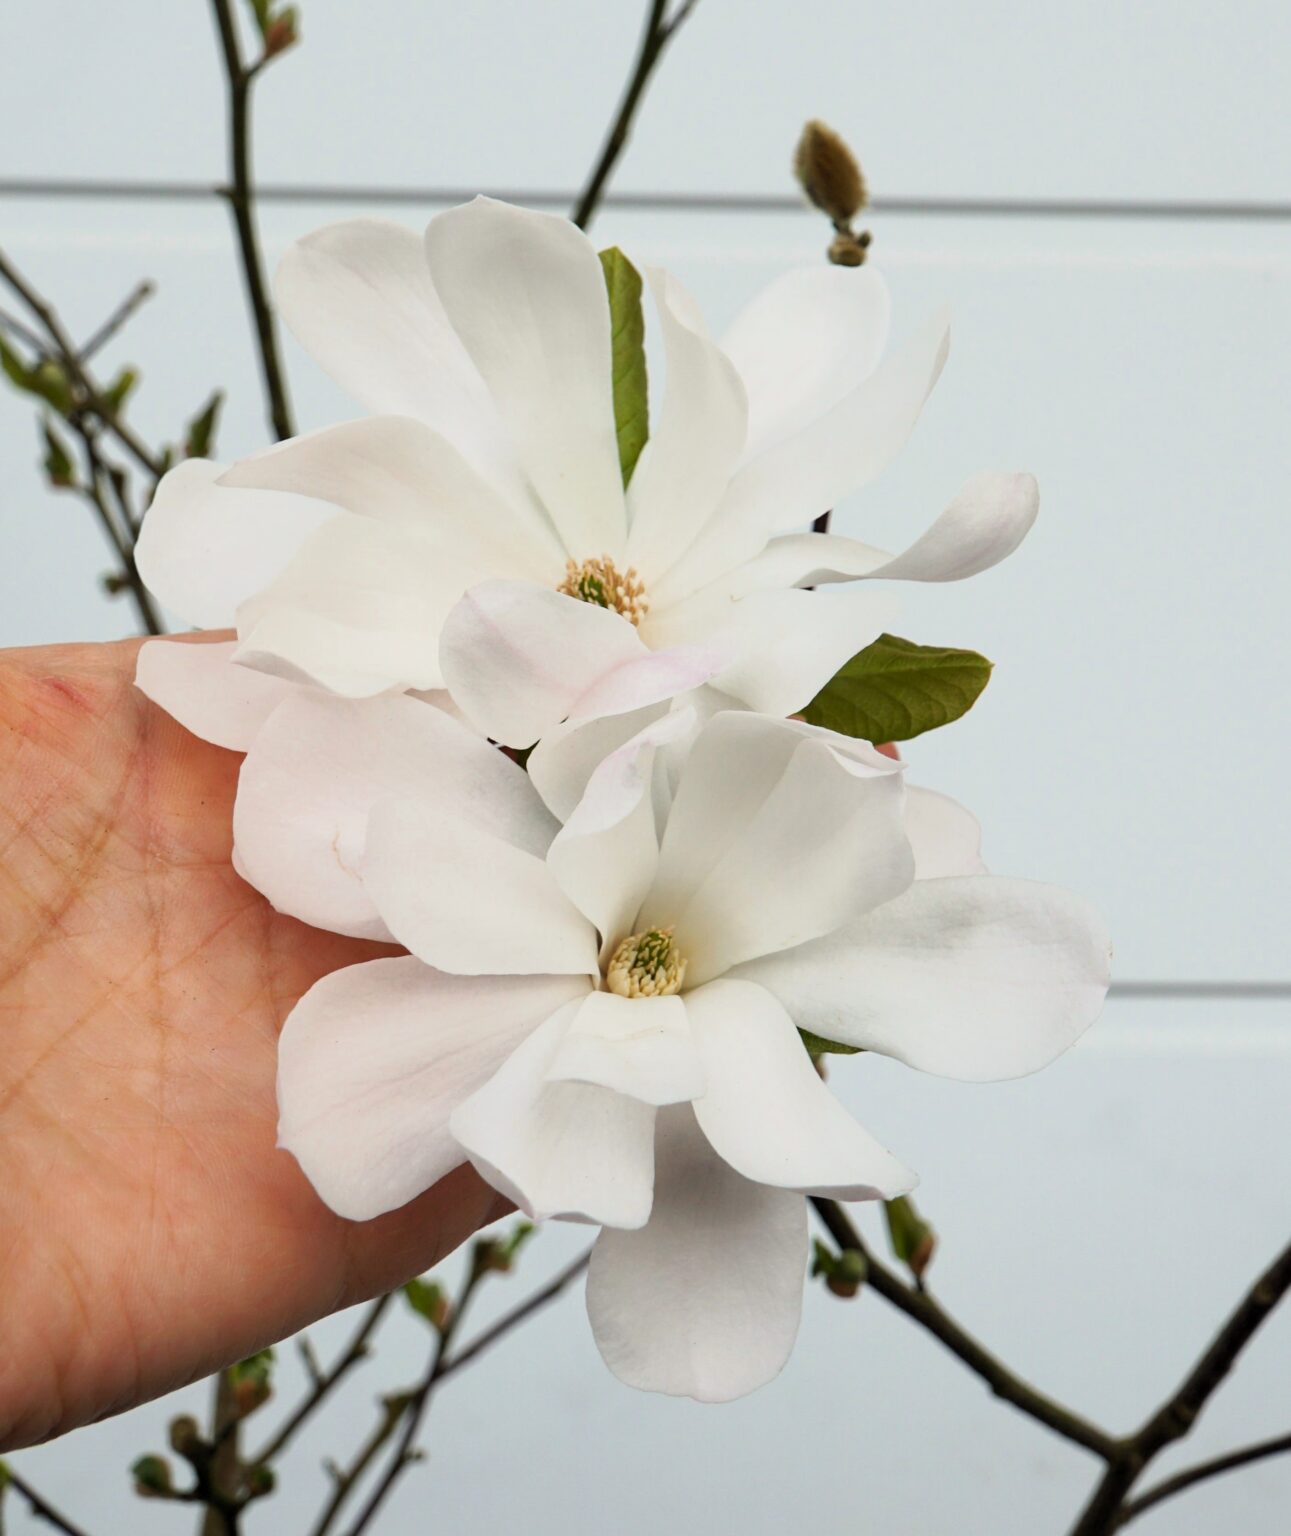 MAGNOLIA GWIAŹDZISTA ALIXEED Magnolia stellata